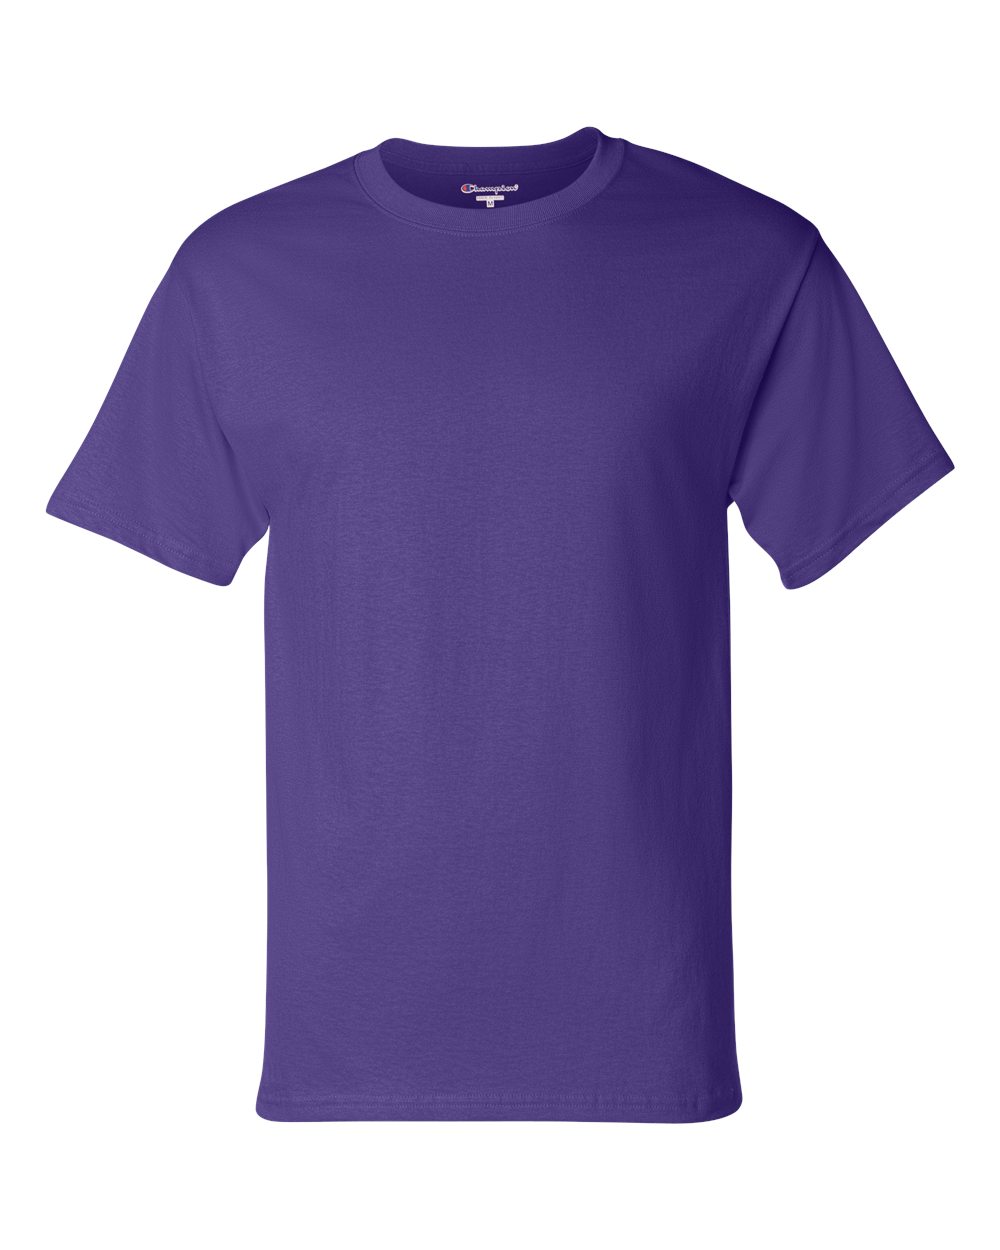 Champion T525C - 100% Cotton Tagless T-Shirt